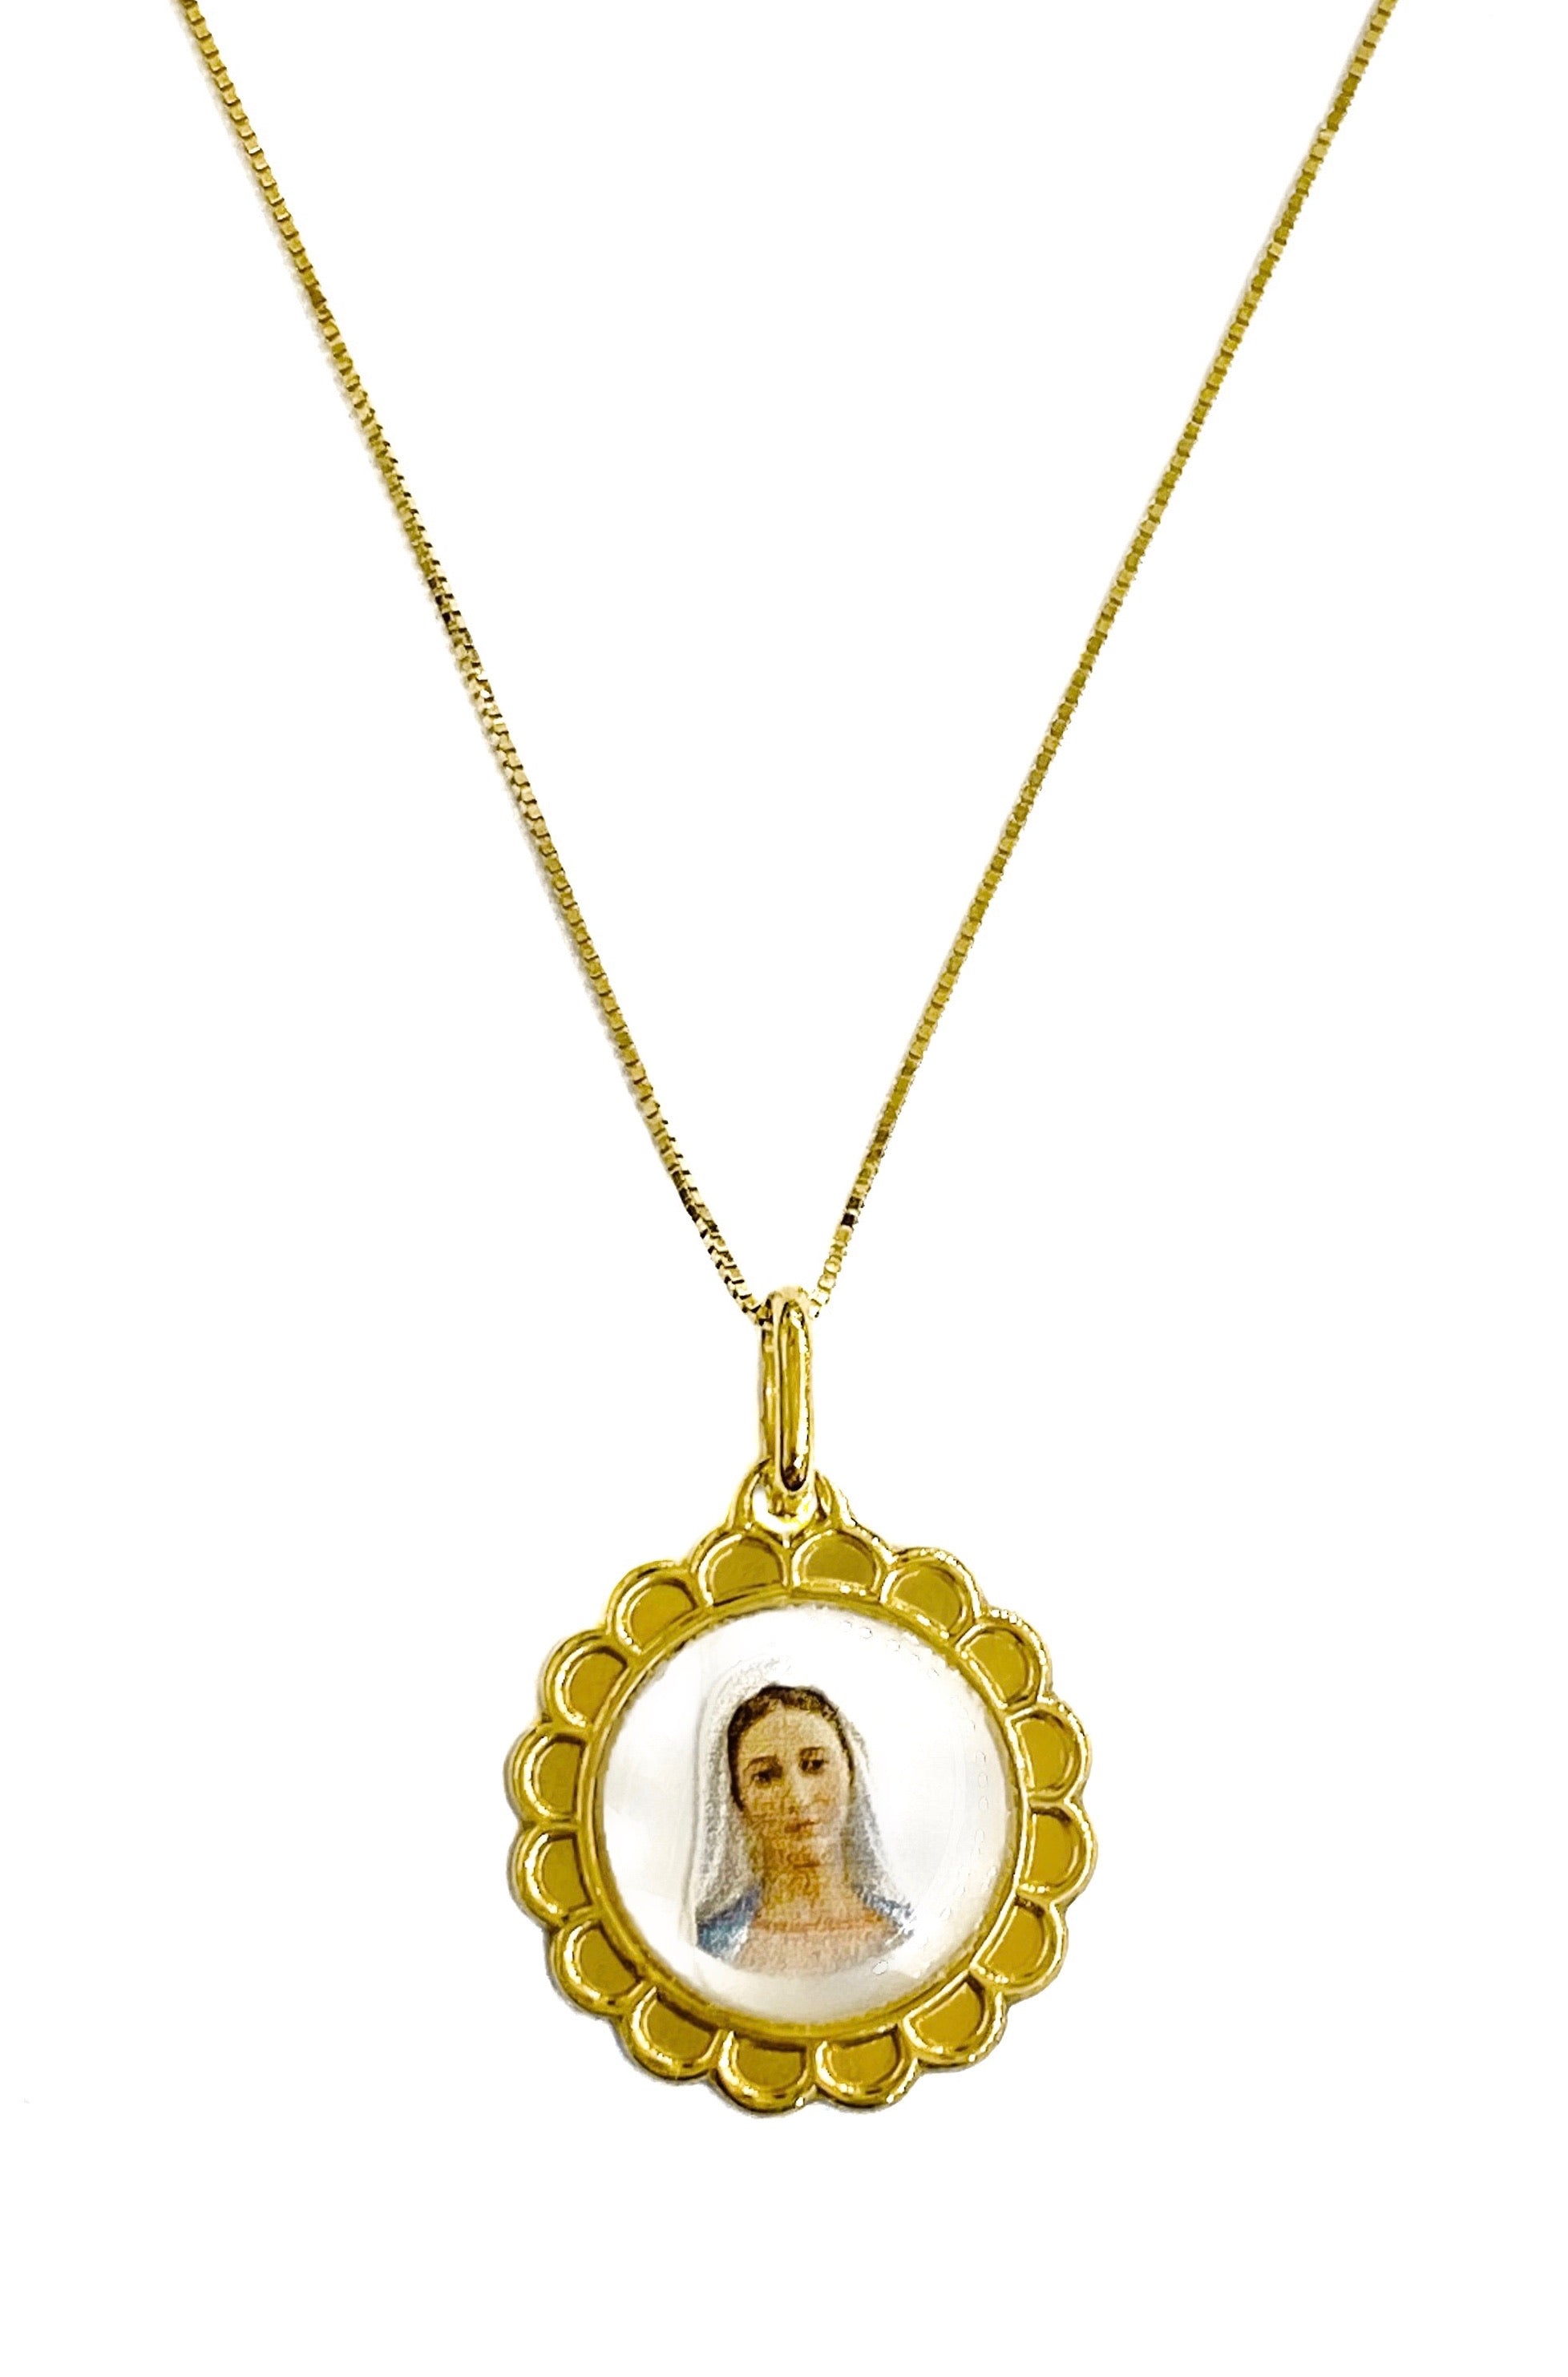 14K YELLOW GOLD OVAL DIAMOND CUT JESUS NECKLACE | Patty Q's Jewelry Inc